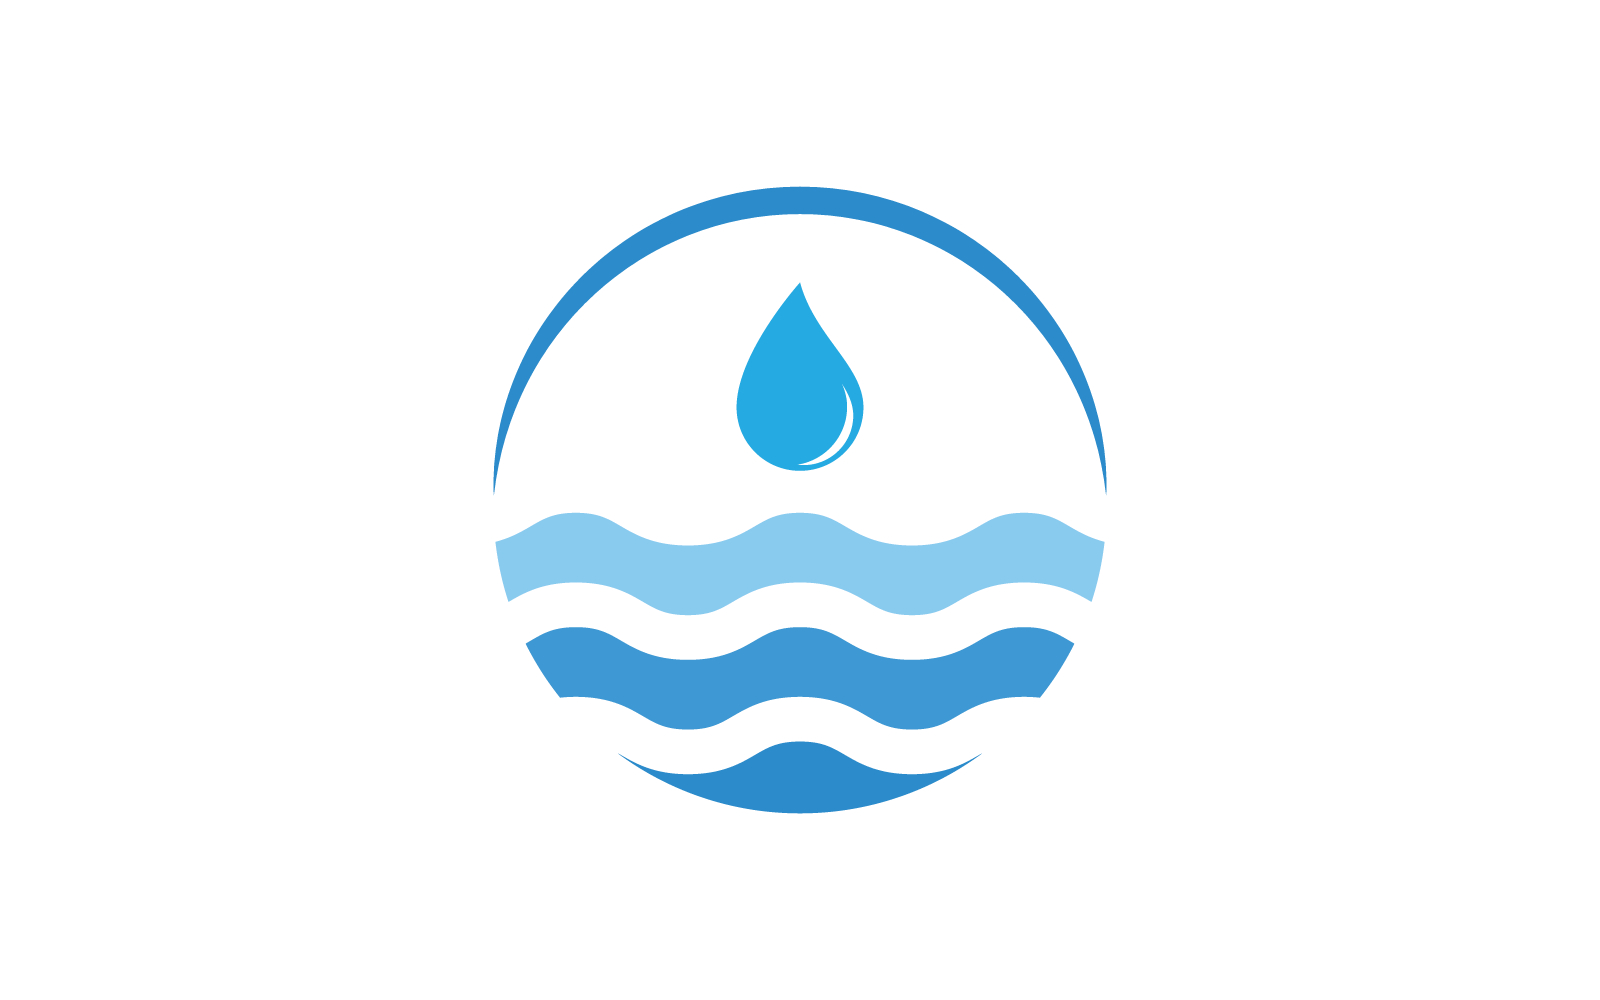 Water Wave  logo vector flat design